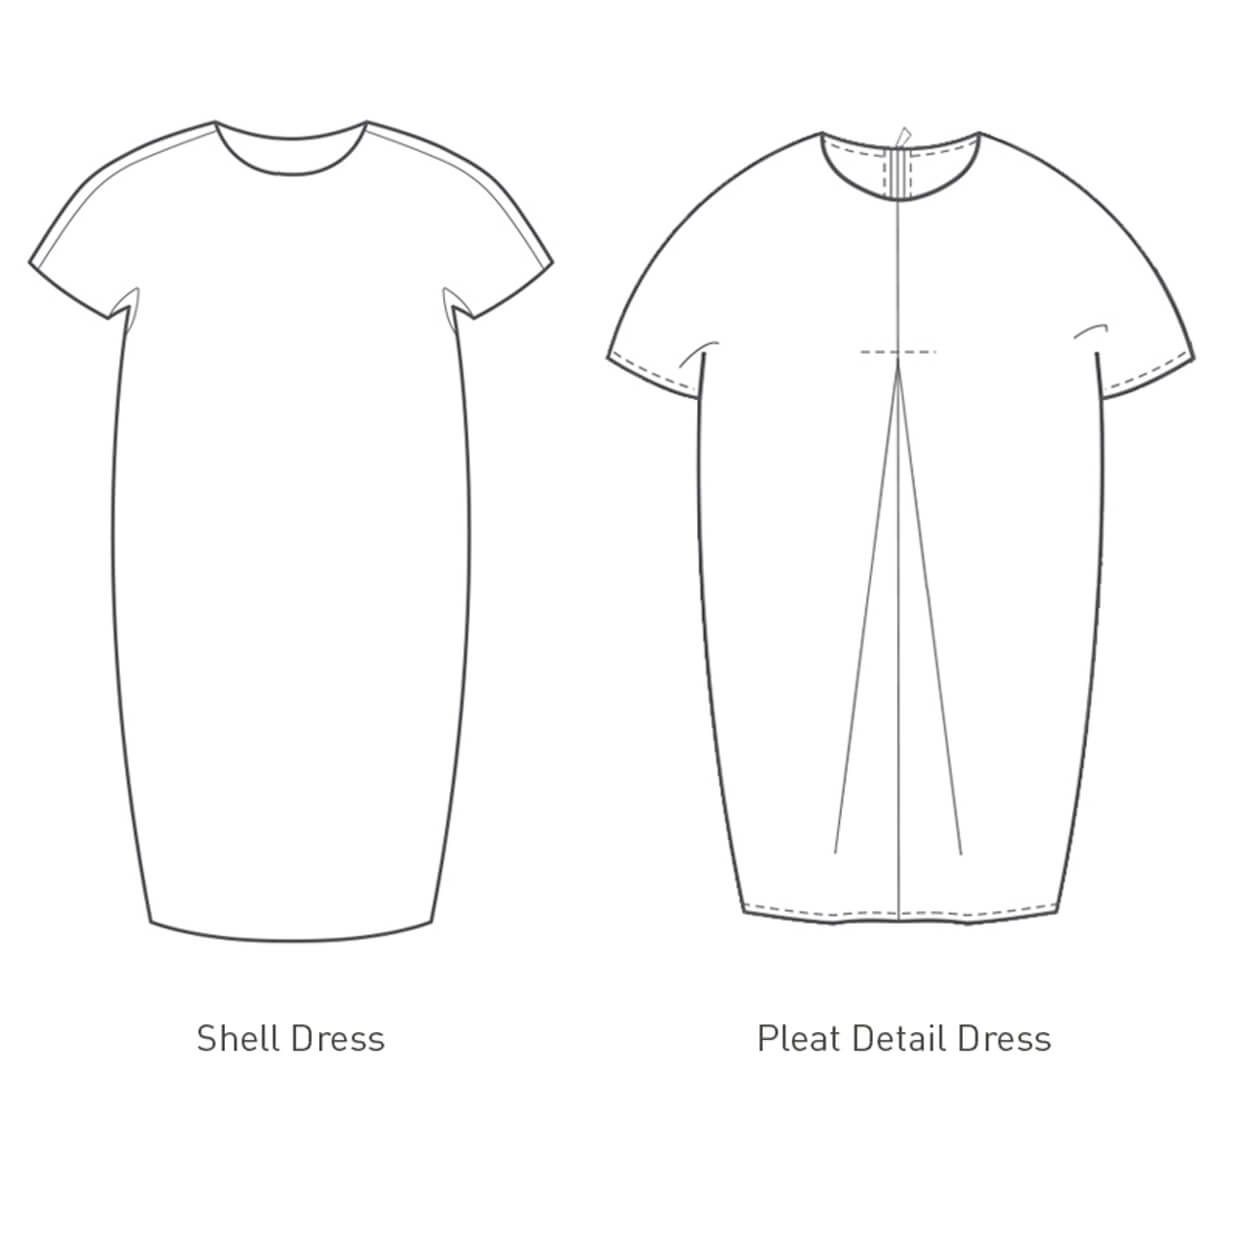 Designing The Pleat Detail Dress